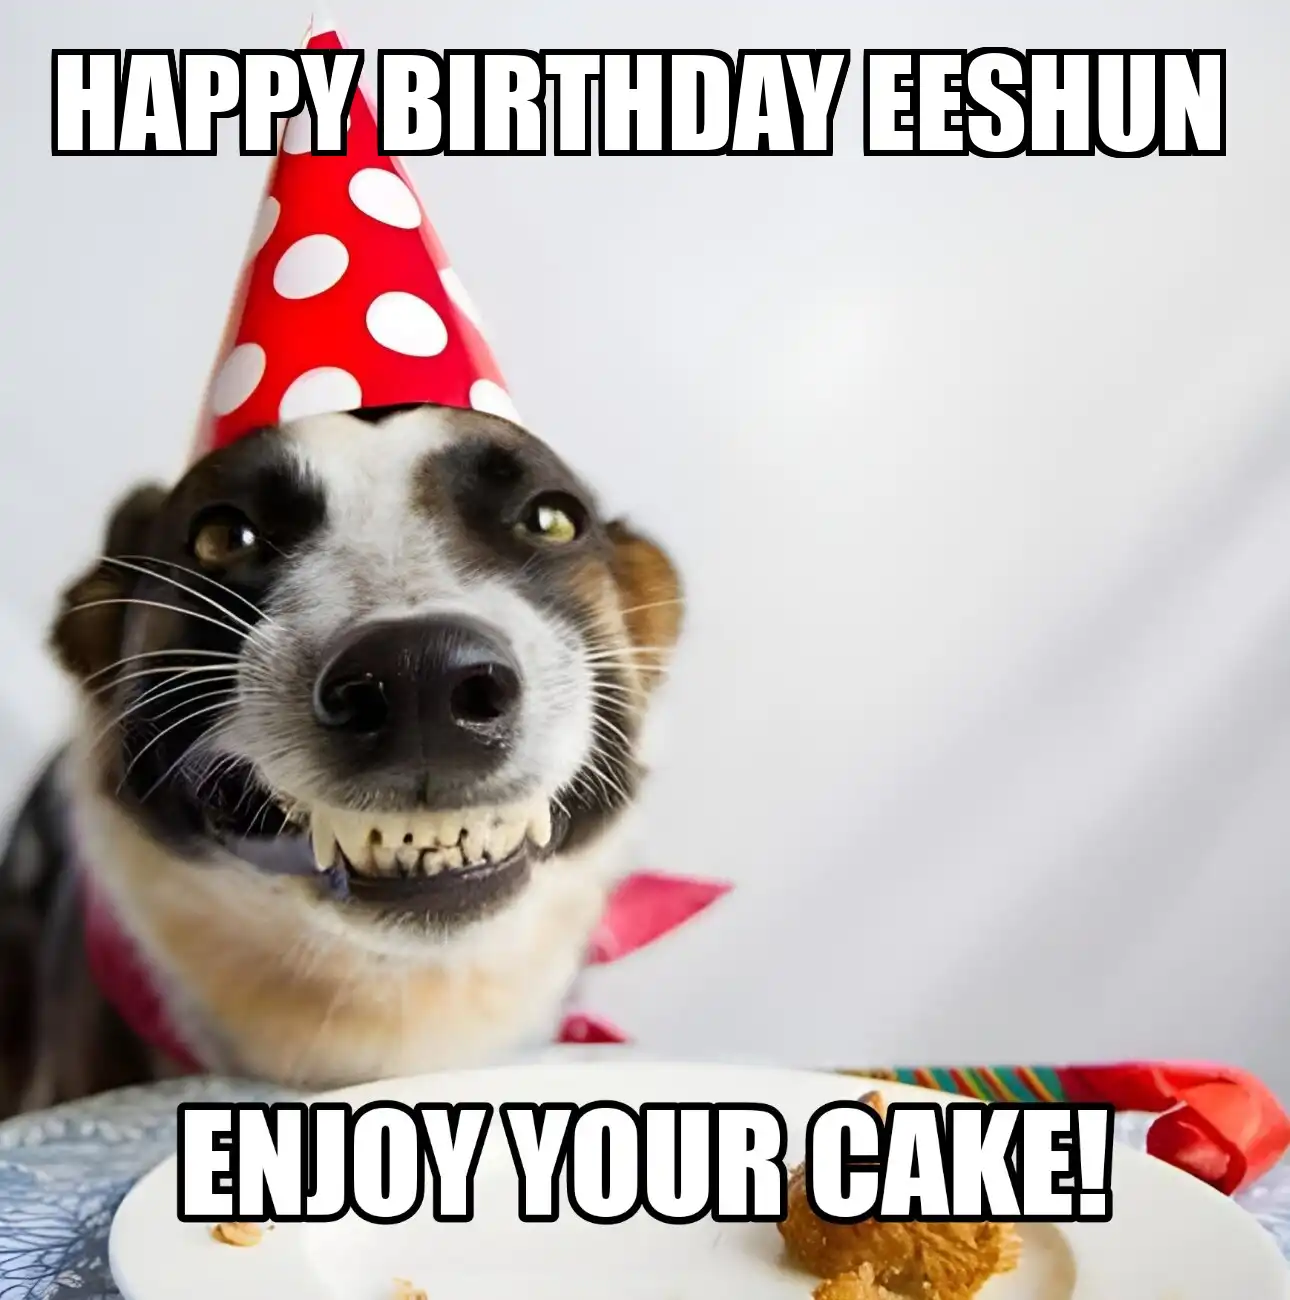 Happy Birthday Eeshun Enjoy Your Cake Dog Meme